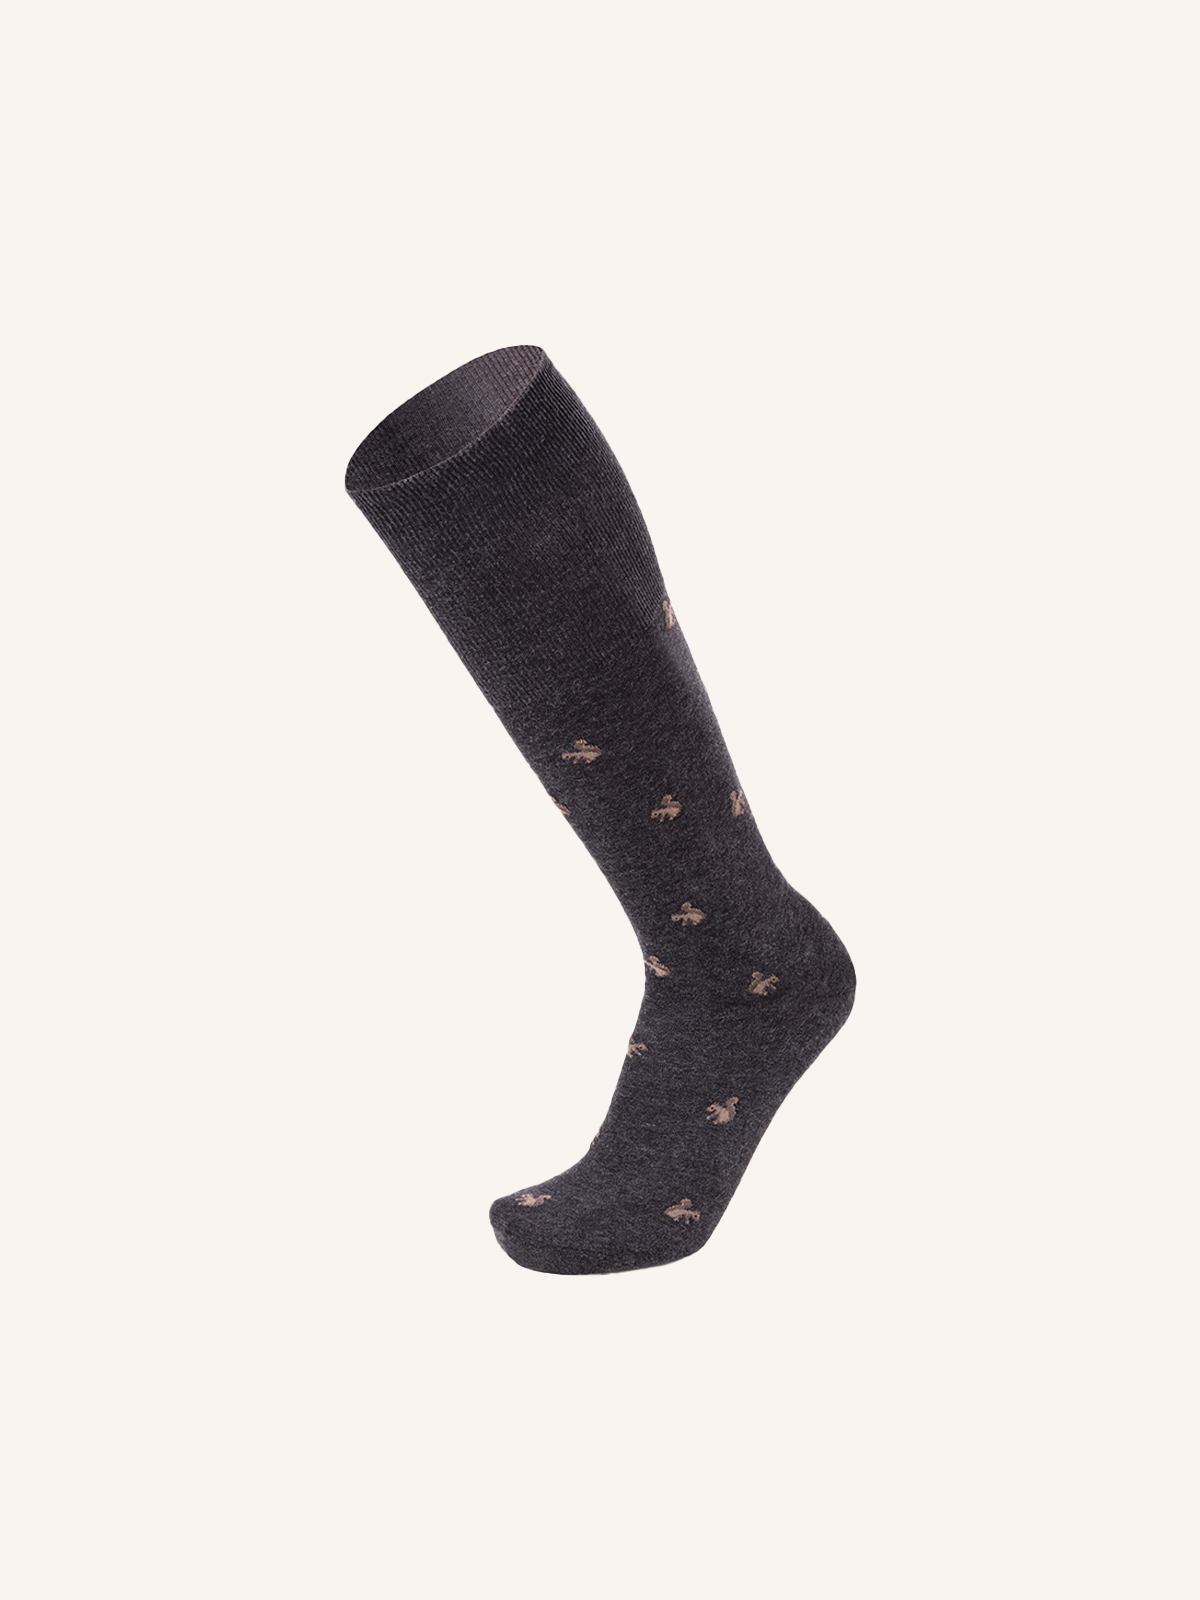 Long Patterned Cotton Socks for Men | Fantasy | Single Pack | Nandy